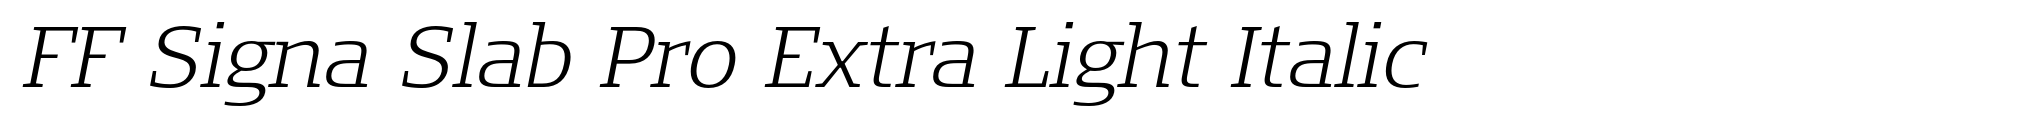 FF Signa Slab Pro Extra Light Italic image